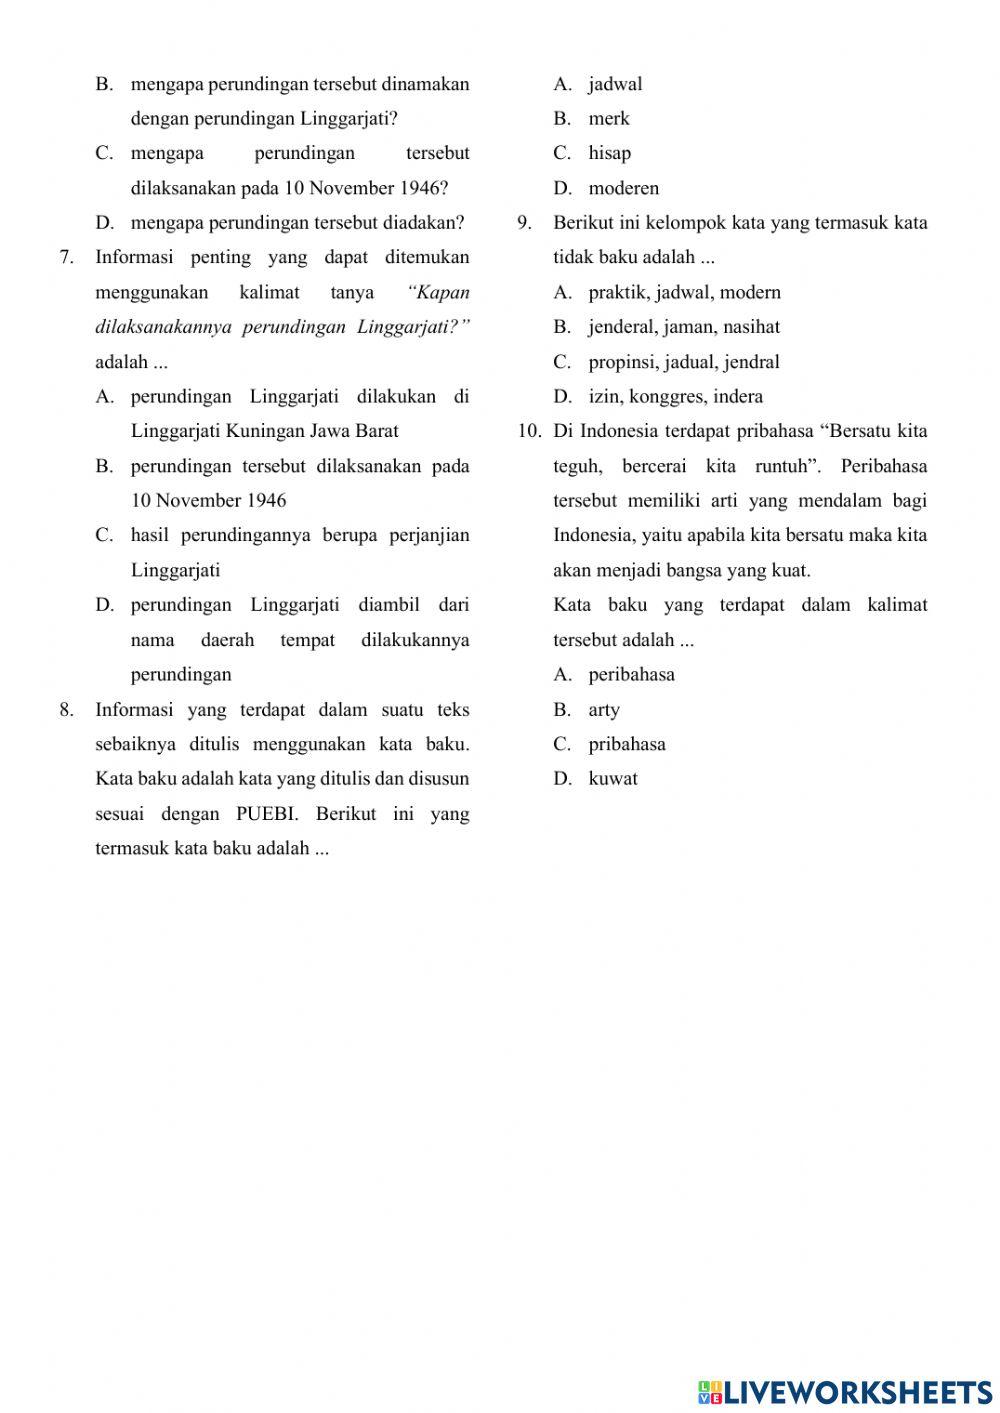 Remedial bahasa indonesia tema 2